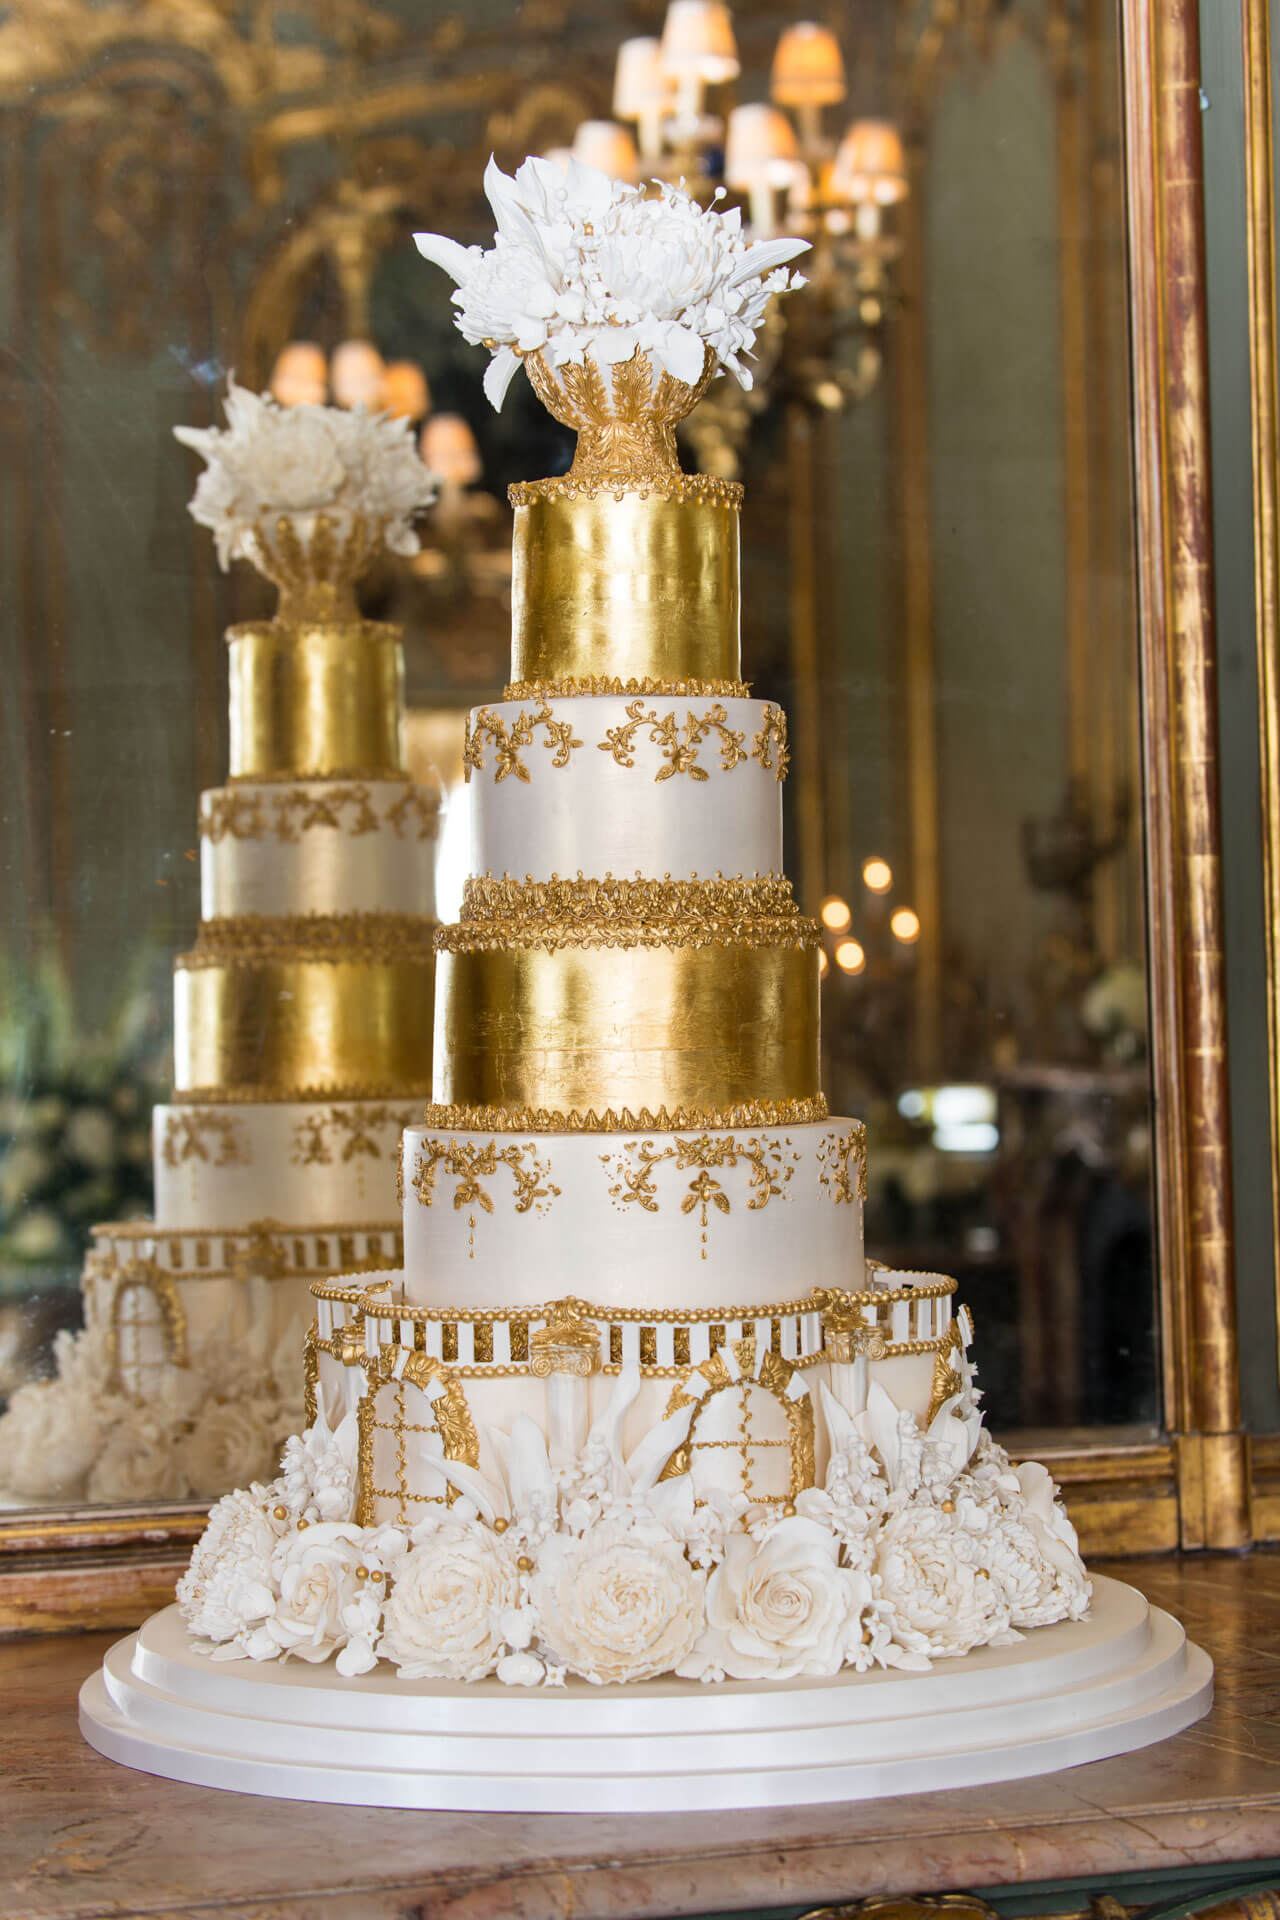 The Cliveden cake By Yevnig